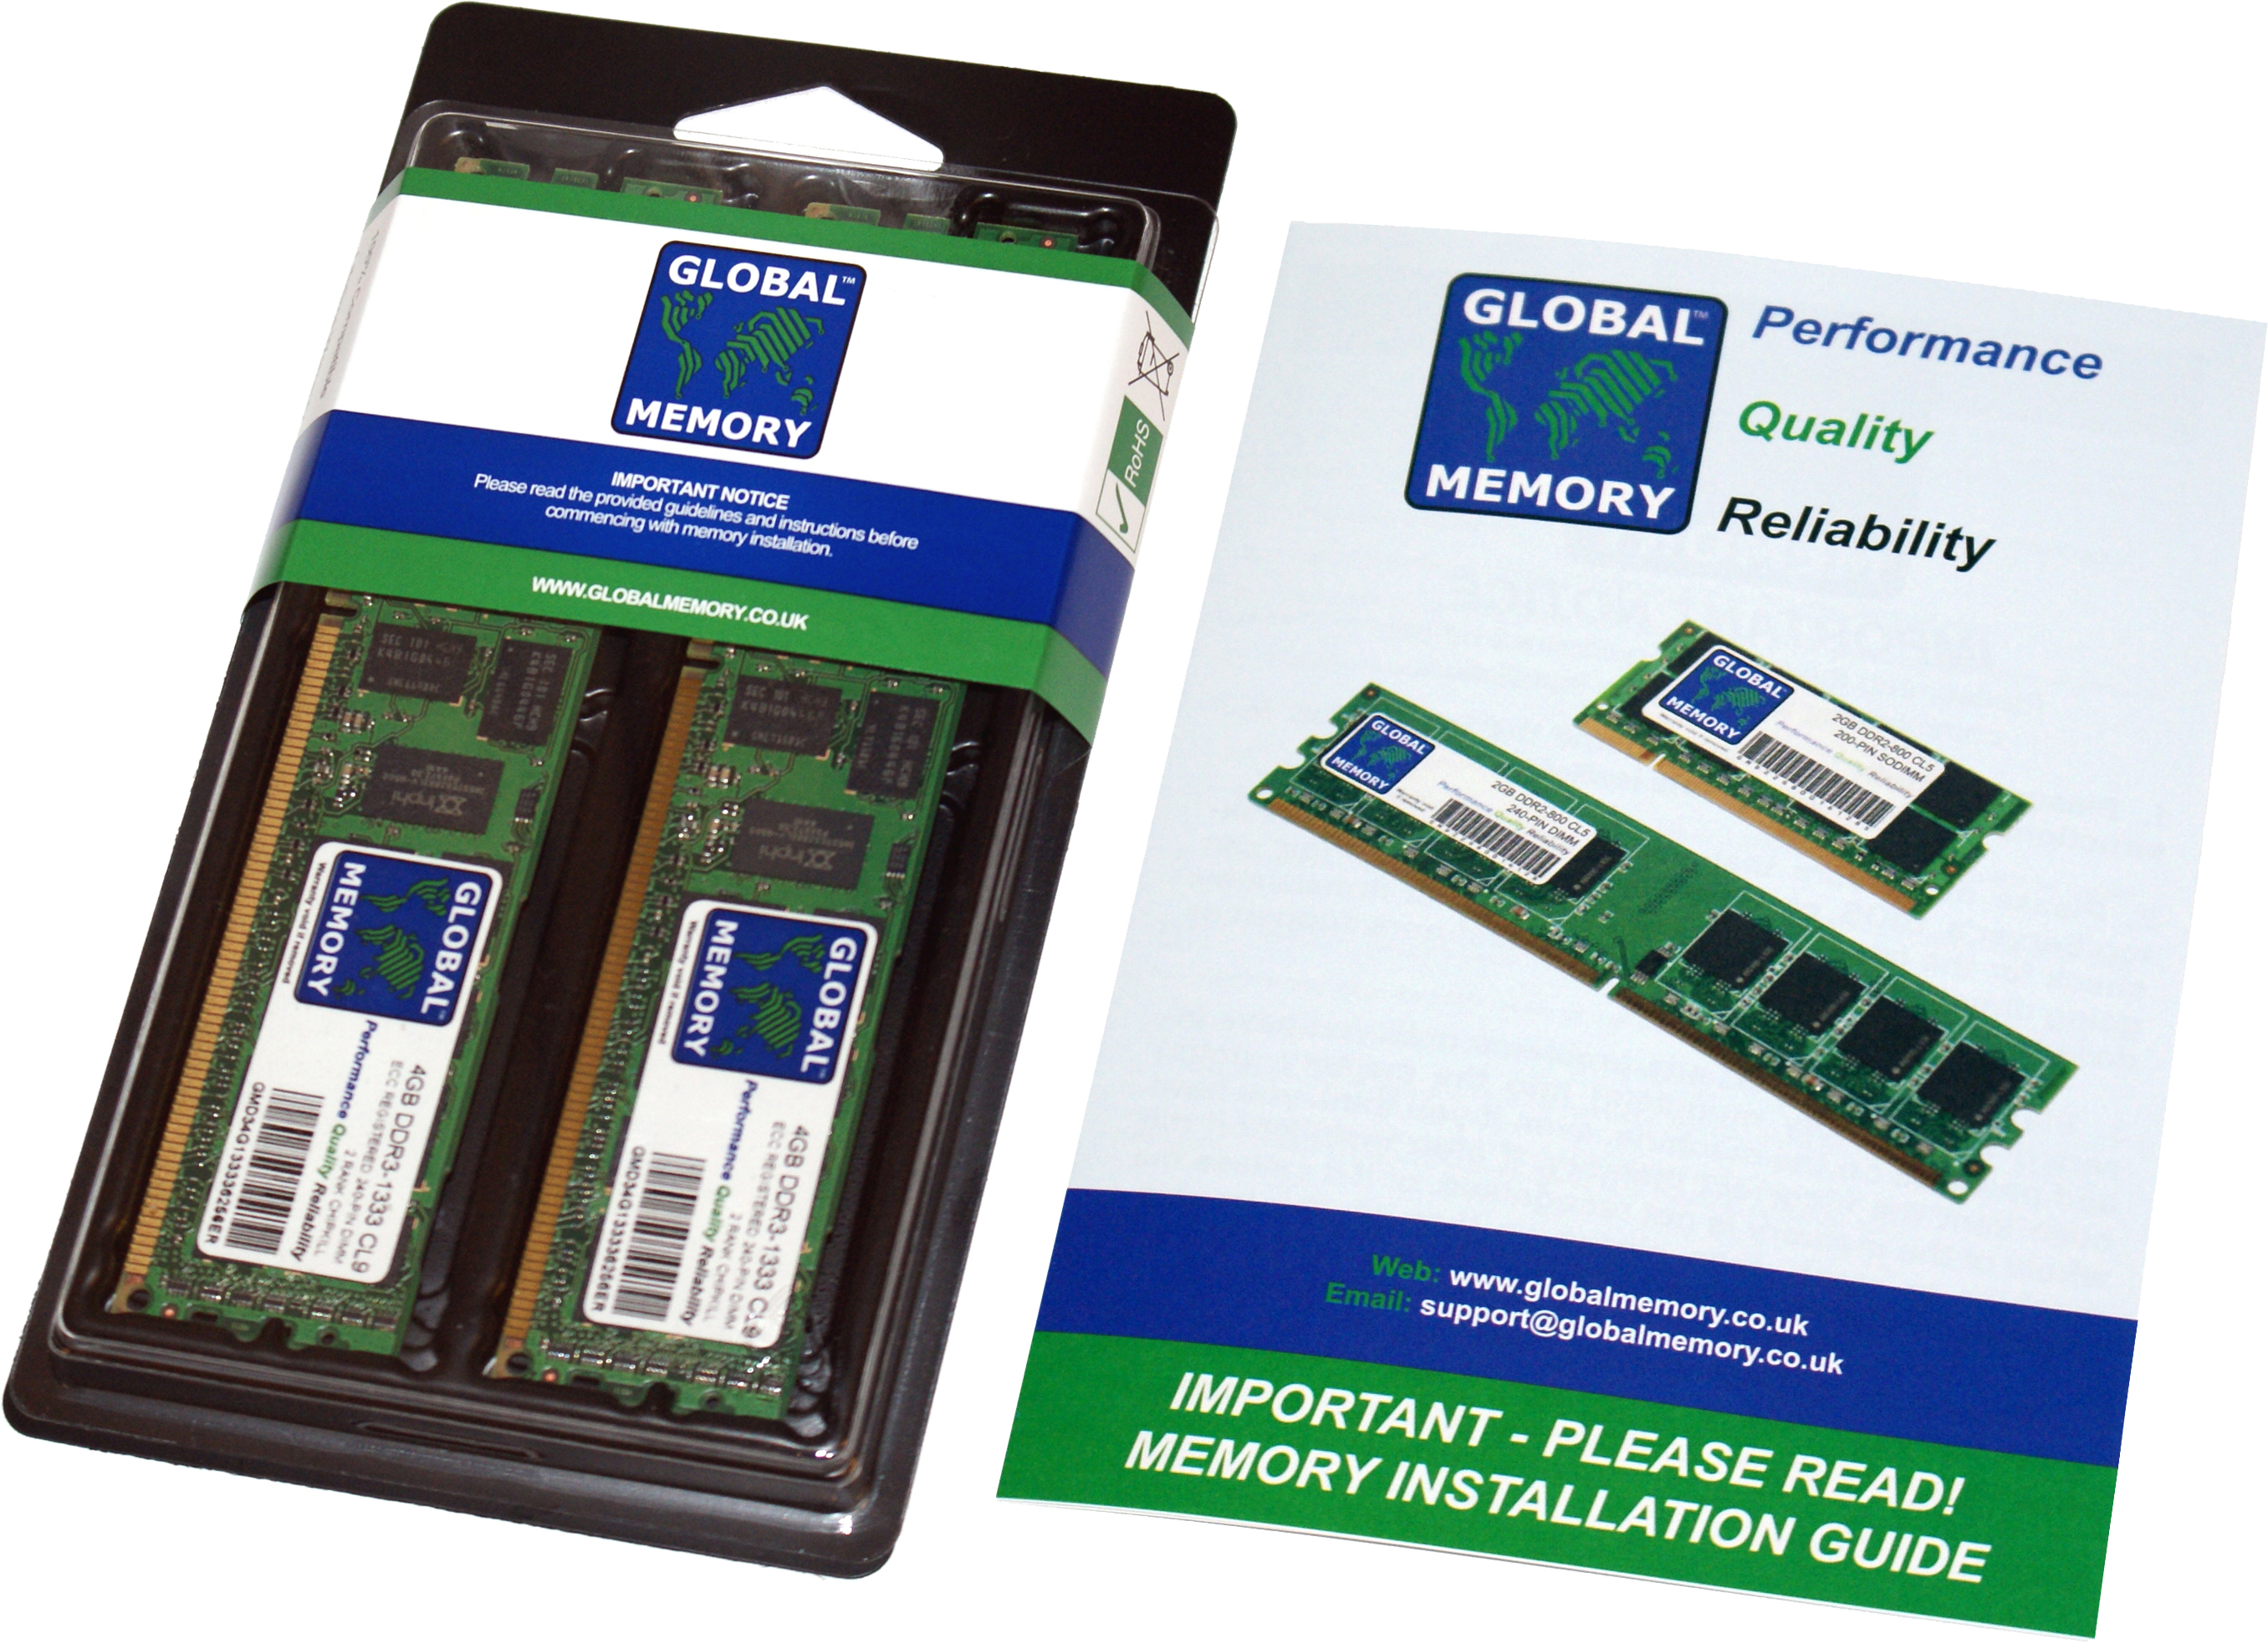 32GB (2 x 16GB) DDR4 2400MHz PC4-19200 288-PIN ECC REGISTERED DIMM (RDIMM) MEMORY RAM KIT FOR FUJITSU SERVERS/WORKSTATIONS (4 RANK KIT CHIPKILL)